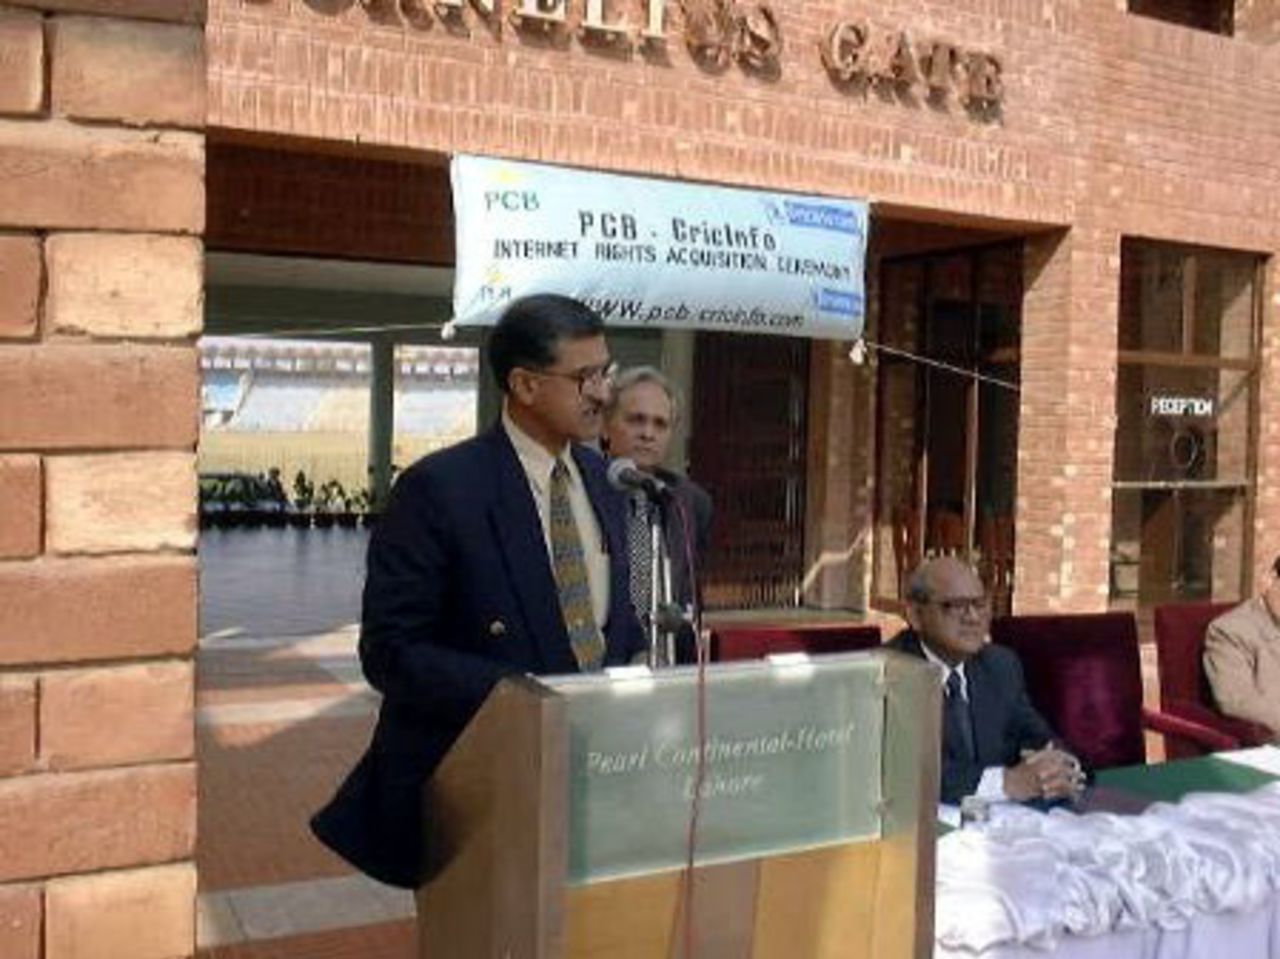 Director PCB, Brig Munawar A. Rana during his address at the PCB - CricInfo Internet Rights Acquisition Ceremony at Gaddafi Stadium, Lahore 5 Feb 2001